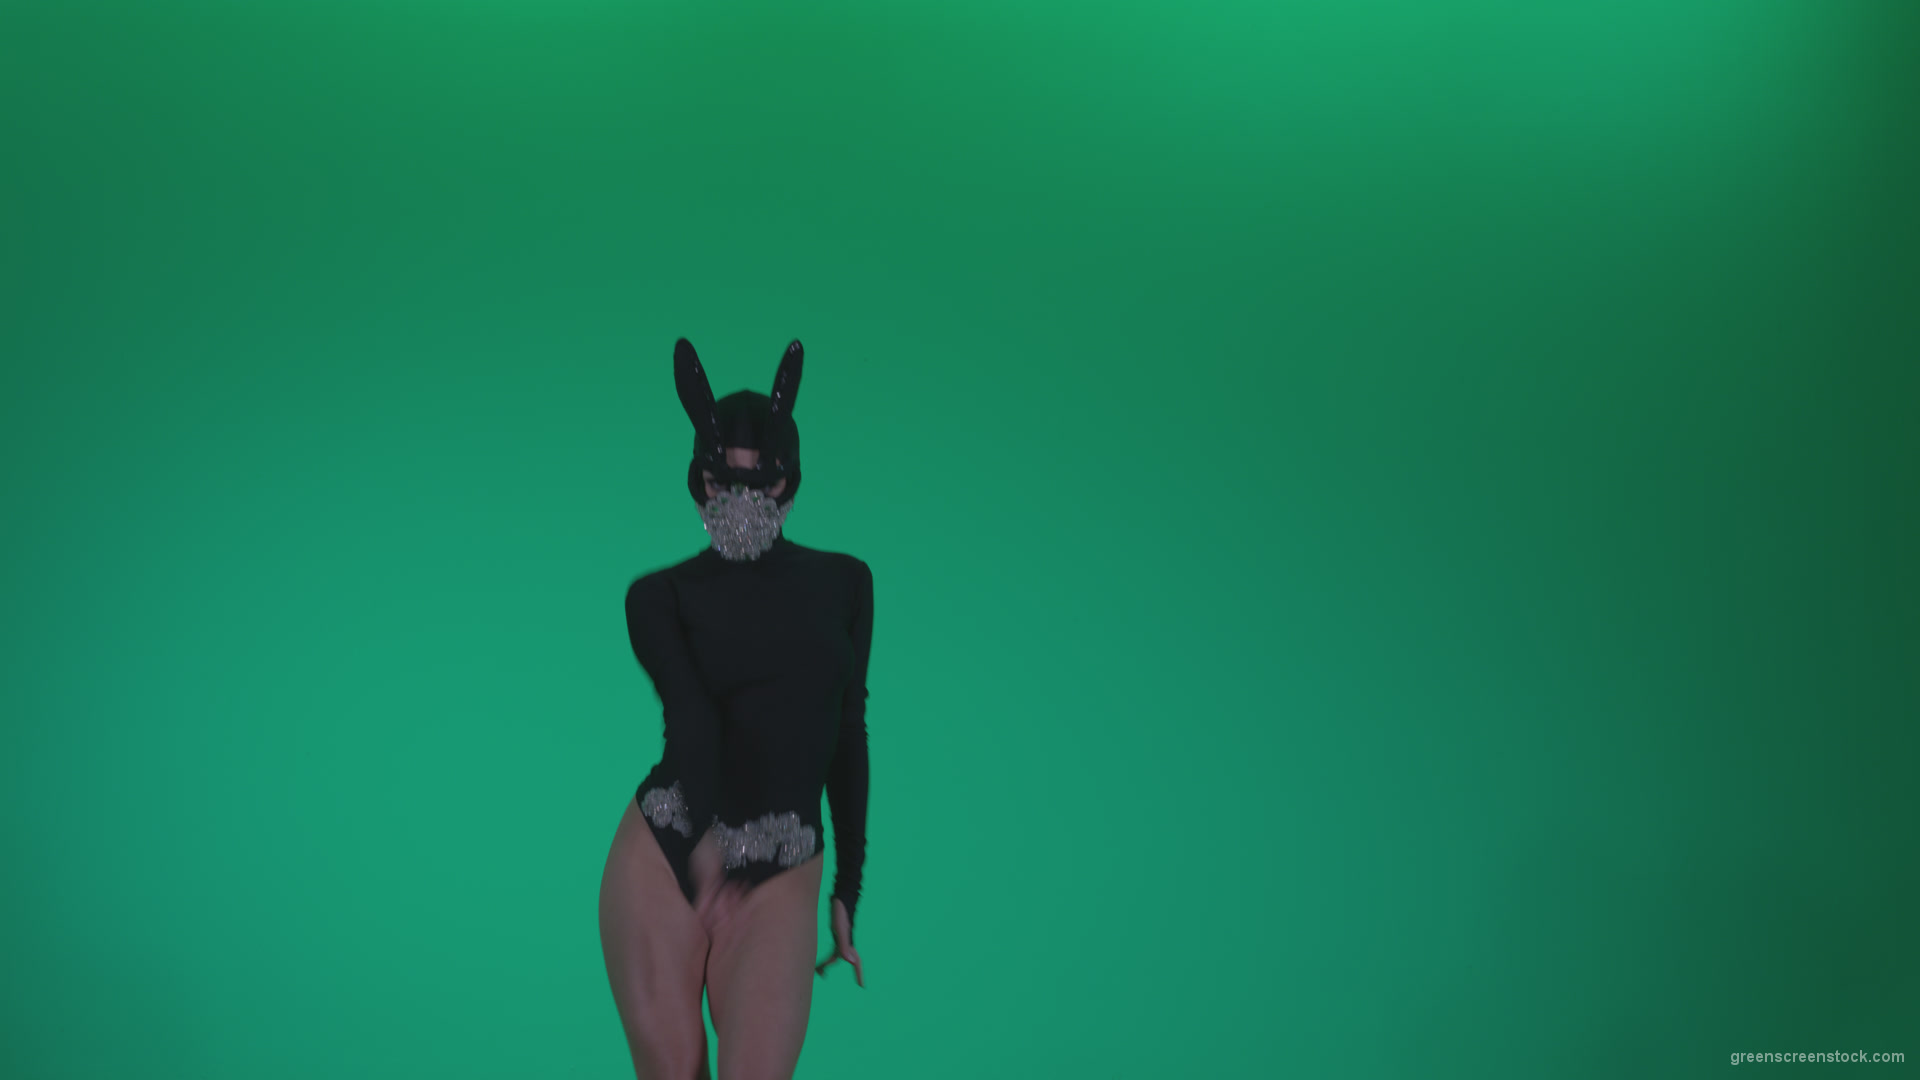 Go-go-Dancer-Black-Rabbit-u13-Green-Screen-Video-Footage_006 Green Screen Stock